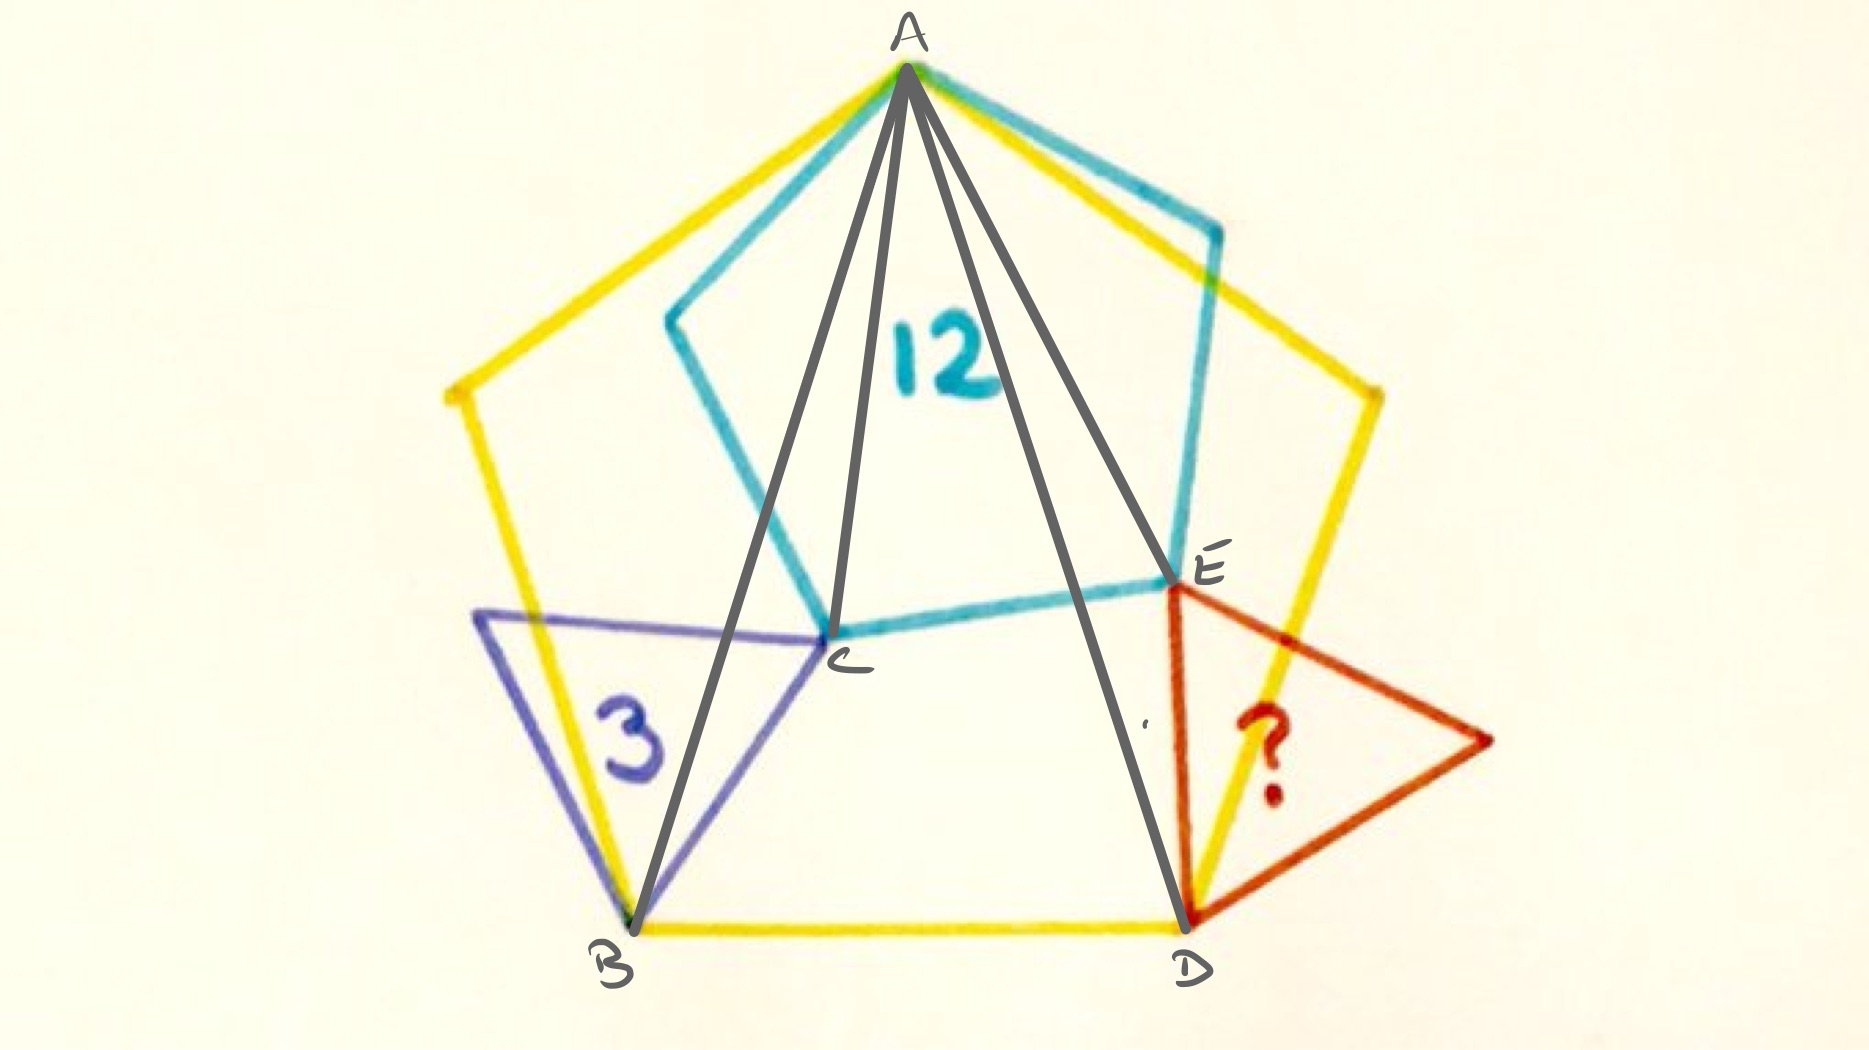 Four regular polygons labelled